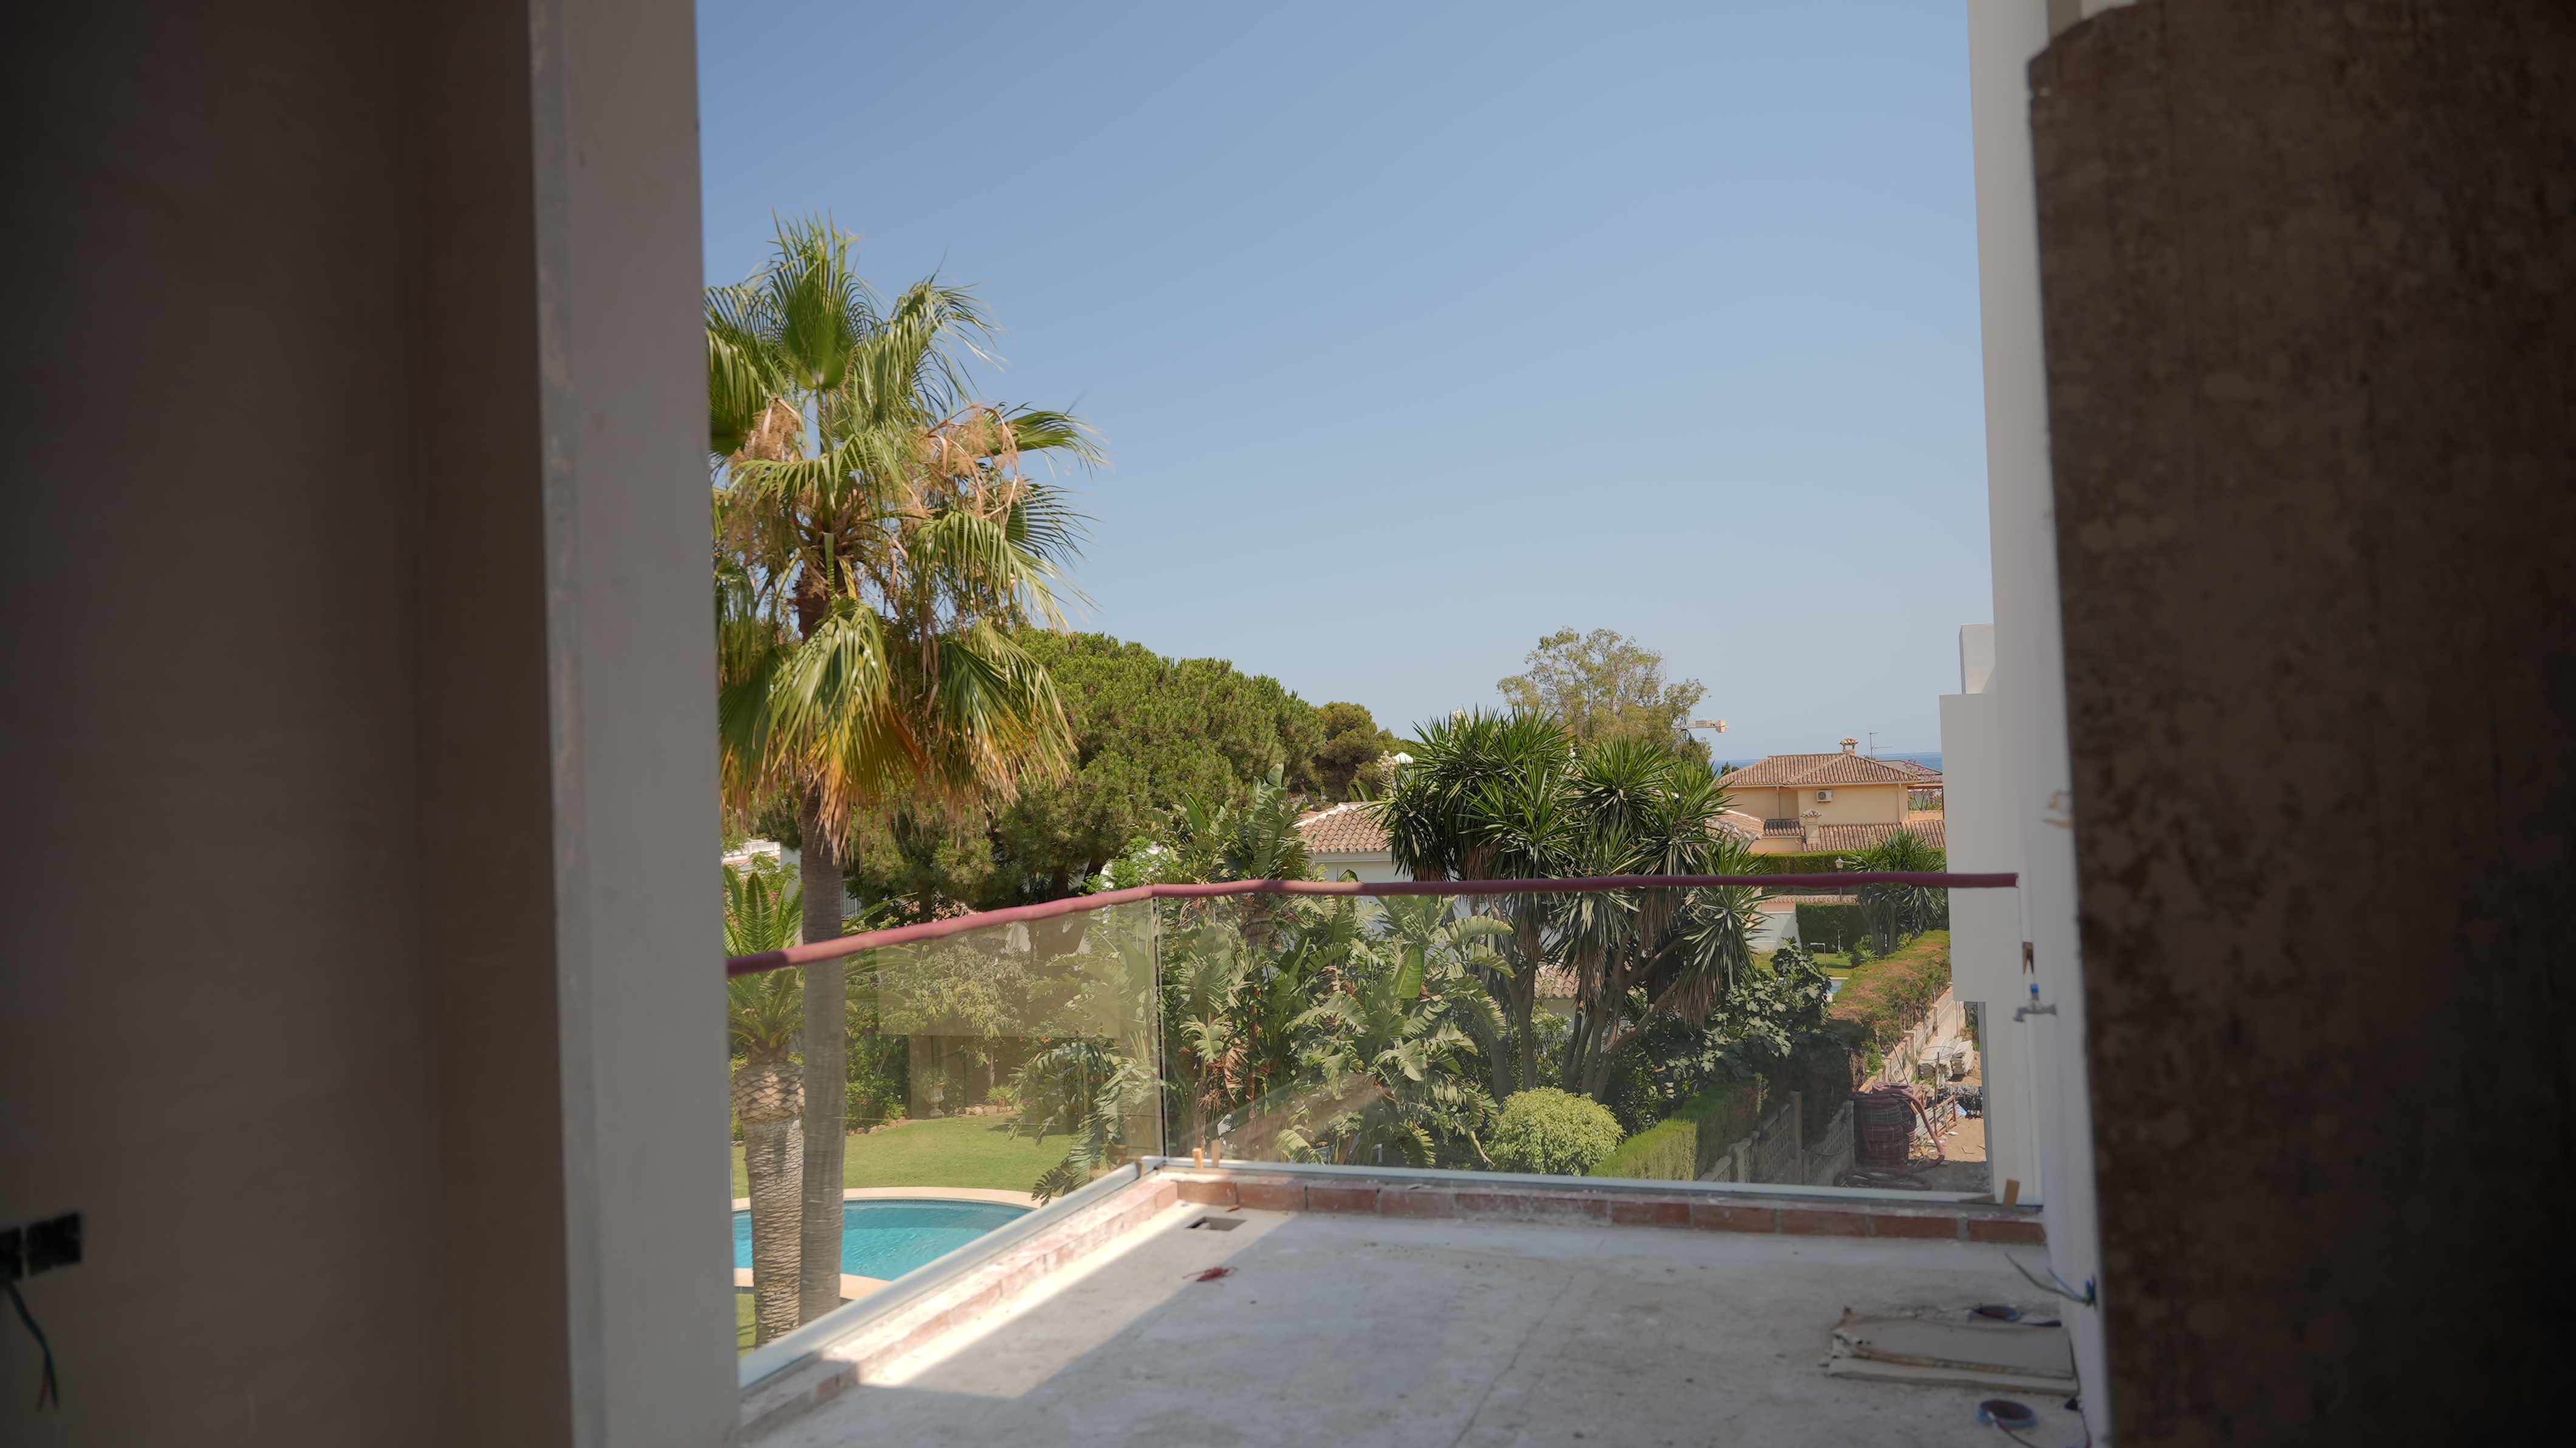 Villa nouvellement construite en bord de mer, clé en main, à Marbella est